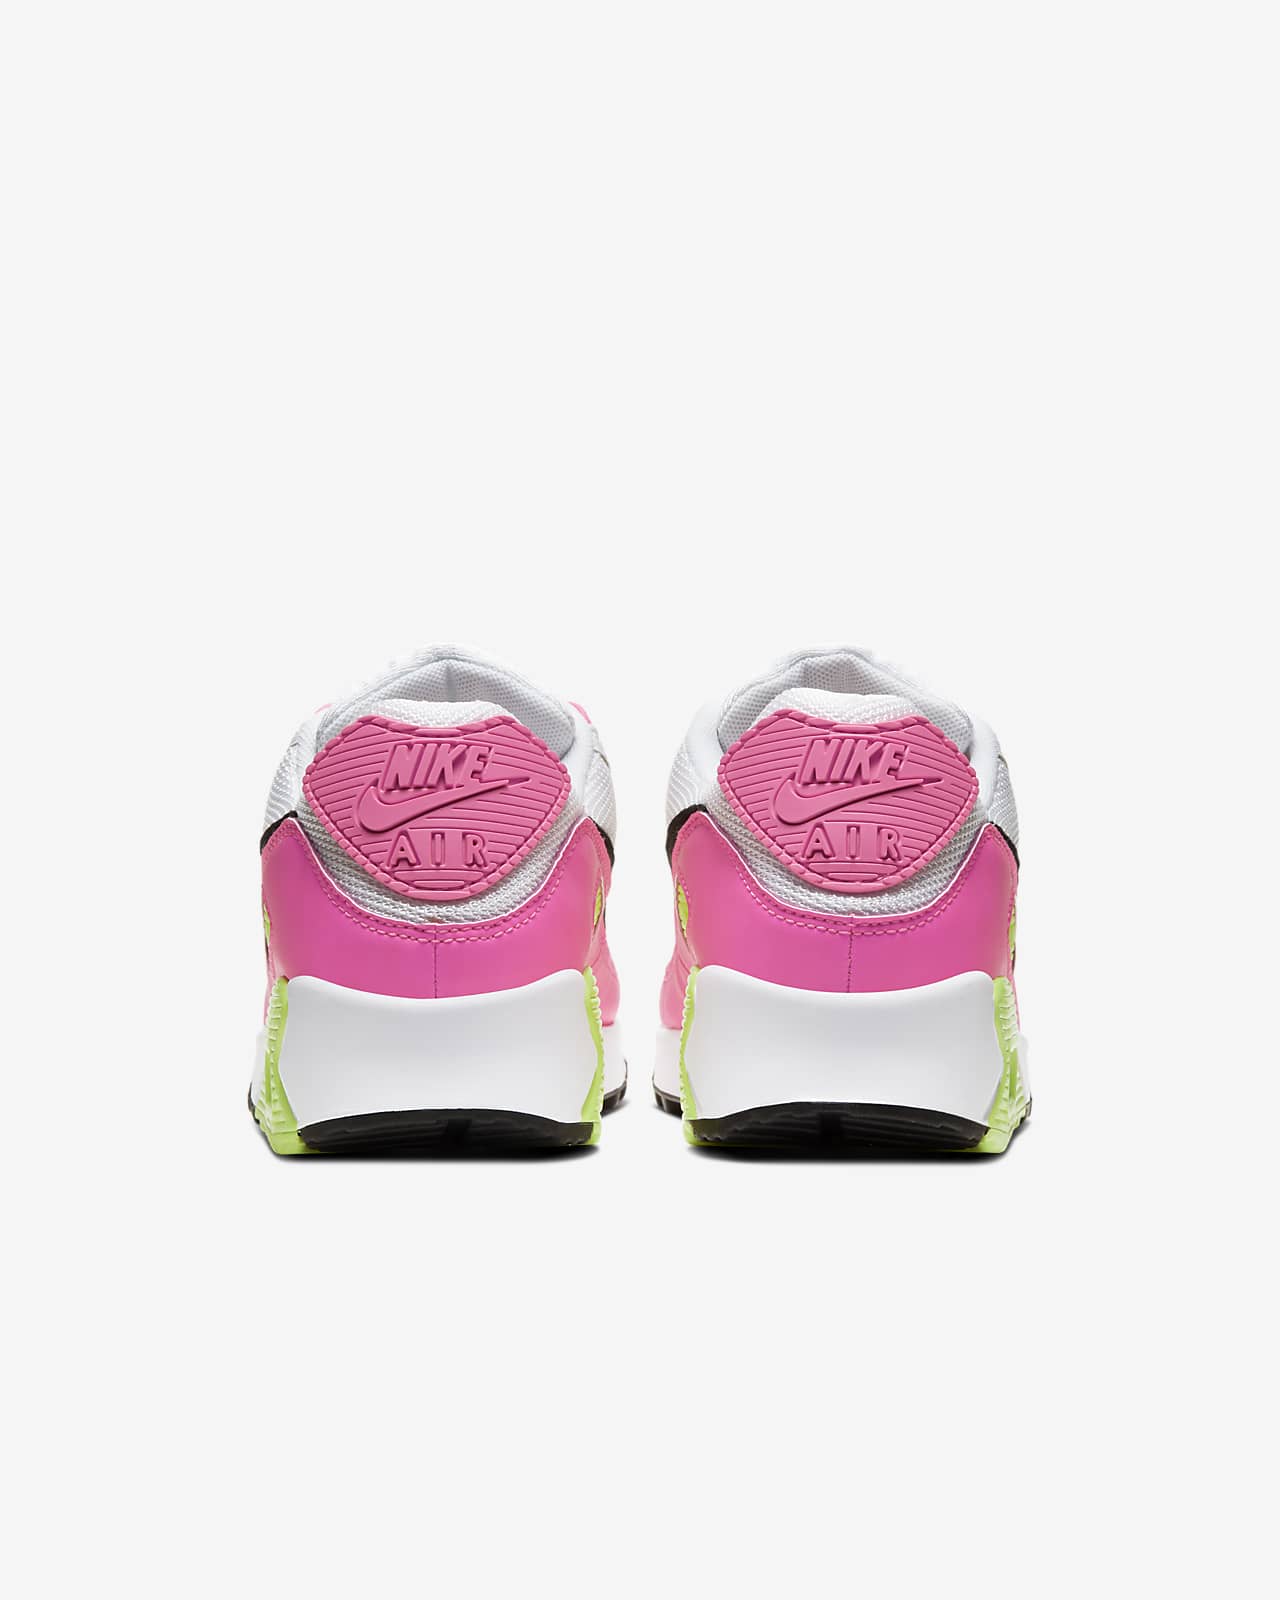 nike air max 90 baby pink sneaker